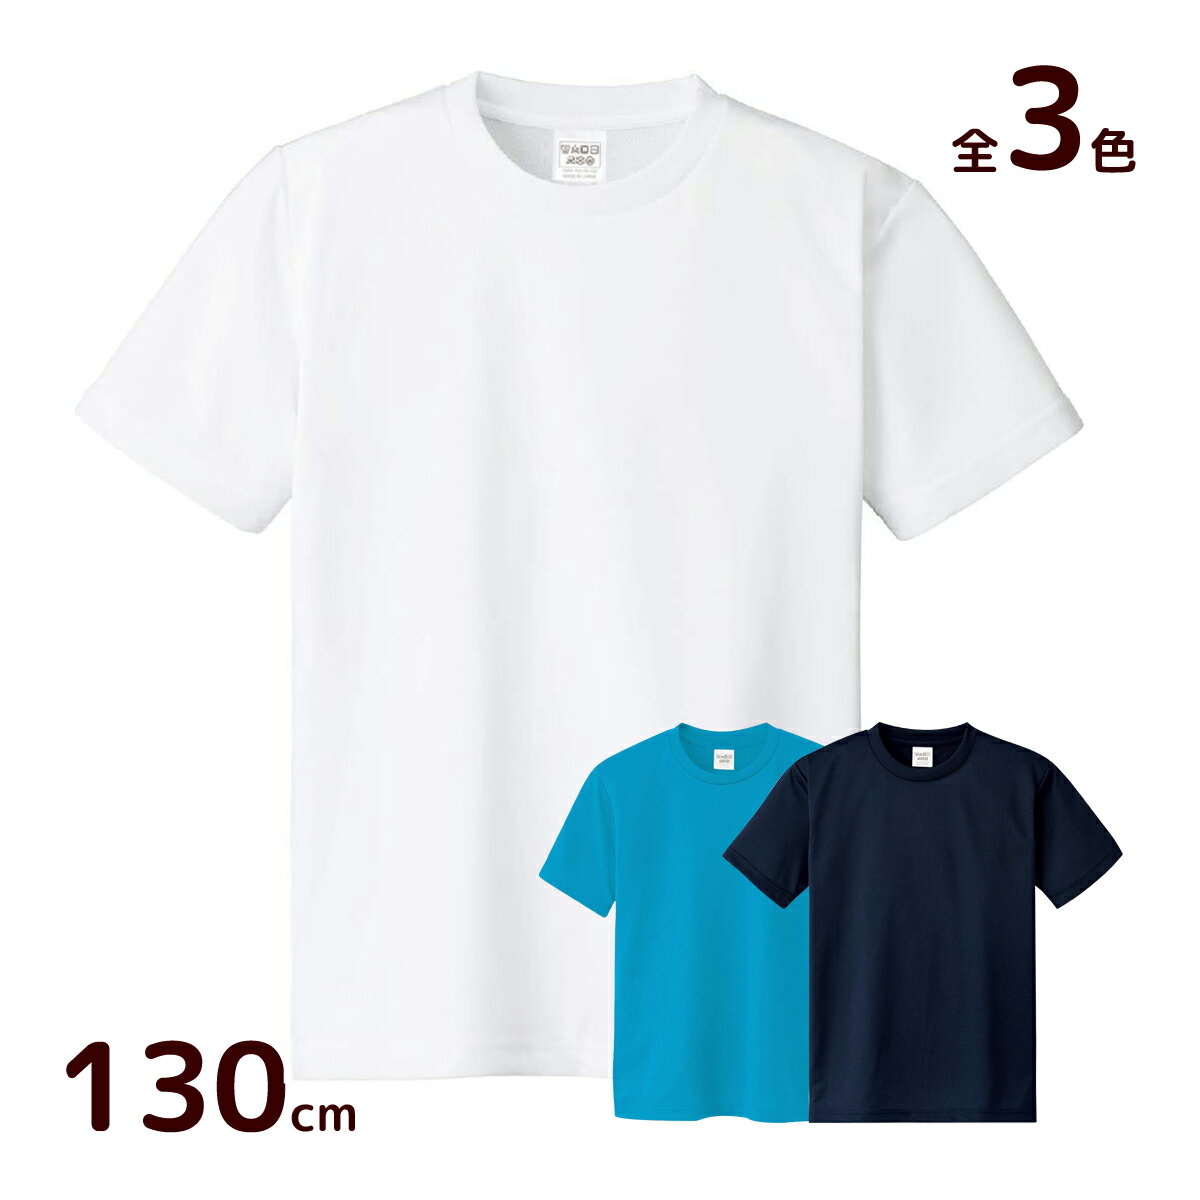 ATドライTシャツ 130cm 150gポリ100% Tシャツ 半袖 無地 運動会 体育祭 文化祭 小学生 キッズ 子供 安い イベント